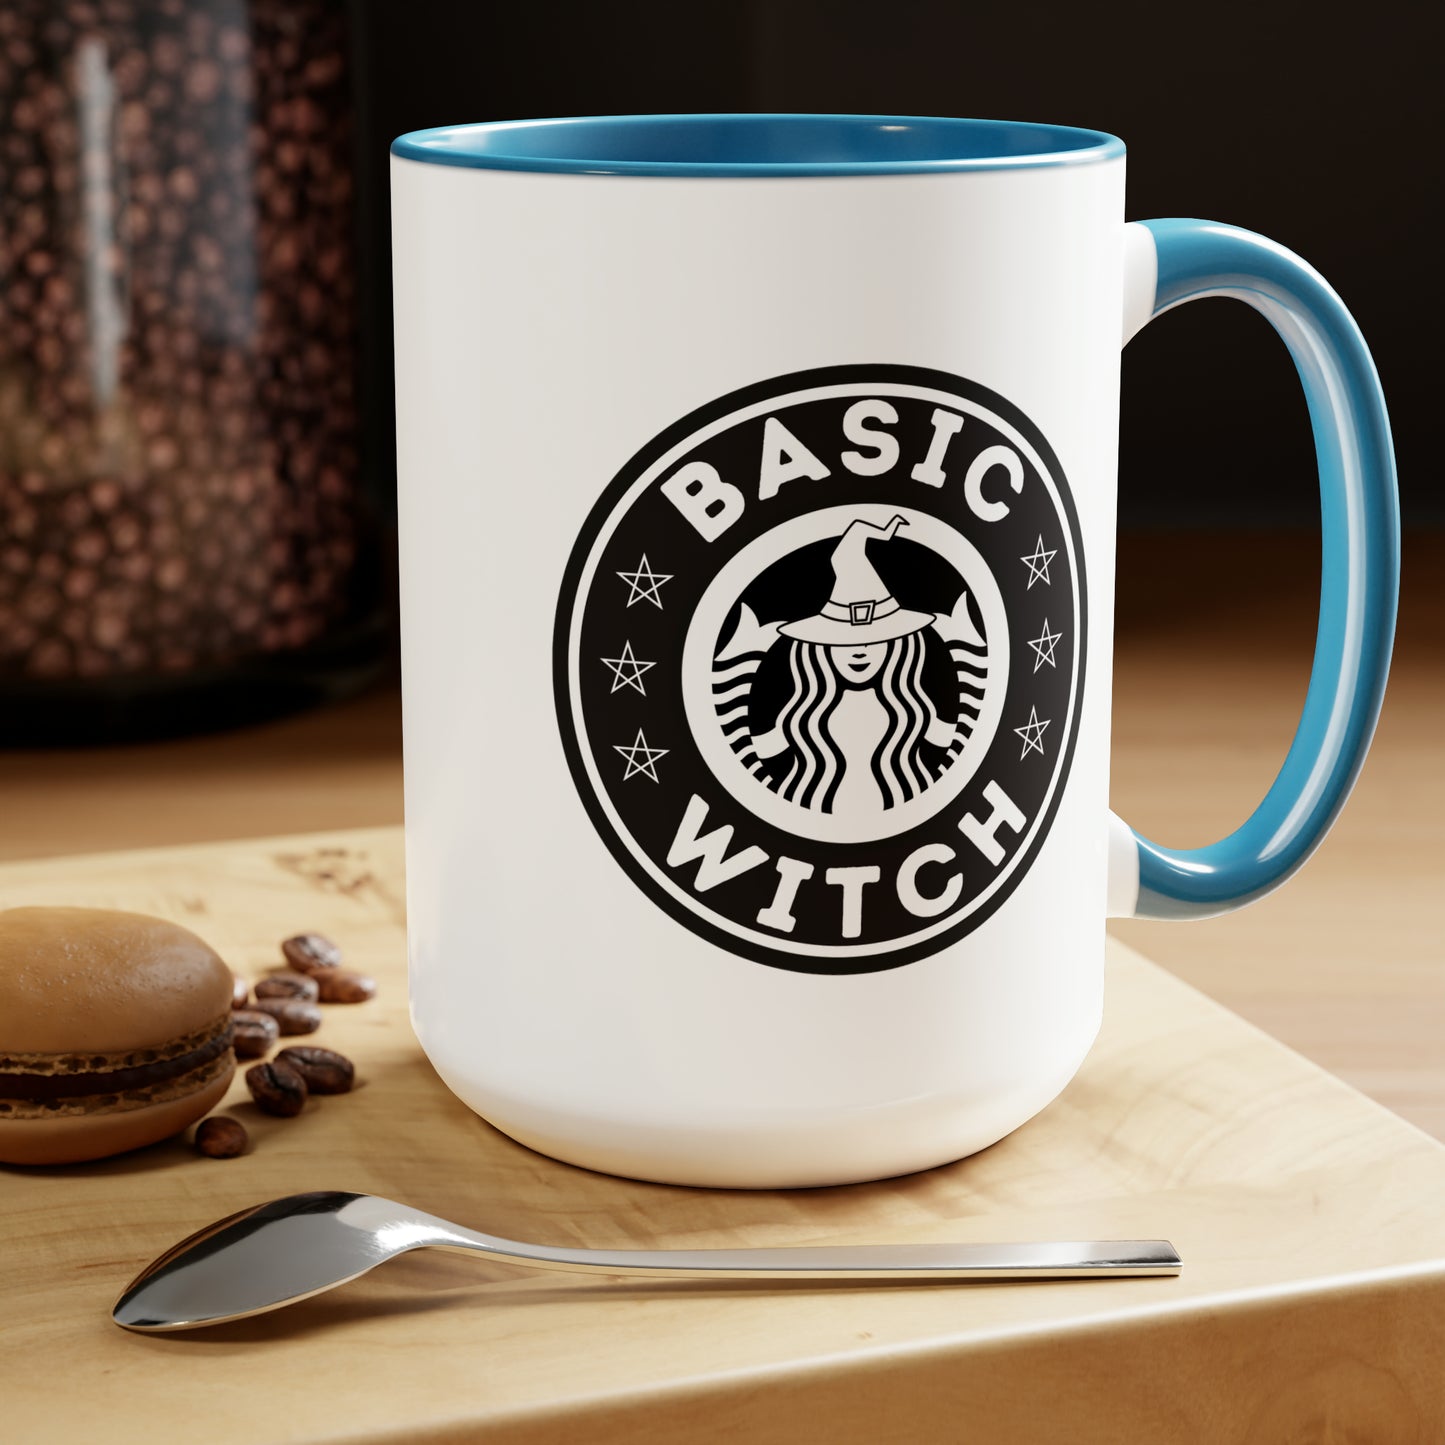 Two-Tone Coffee Mugs, 15oz - Basic Witch